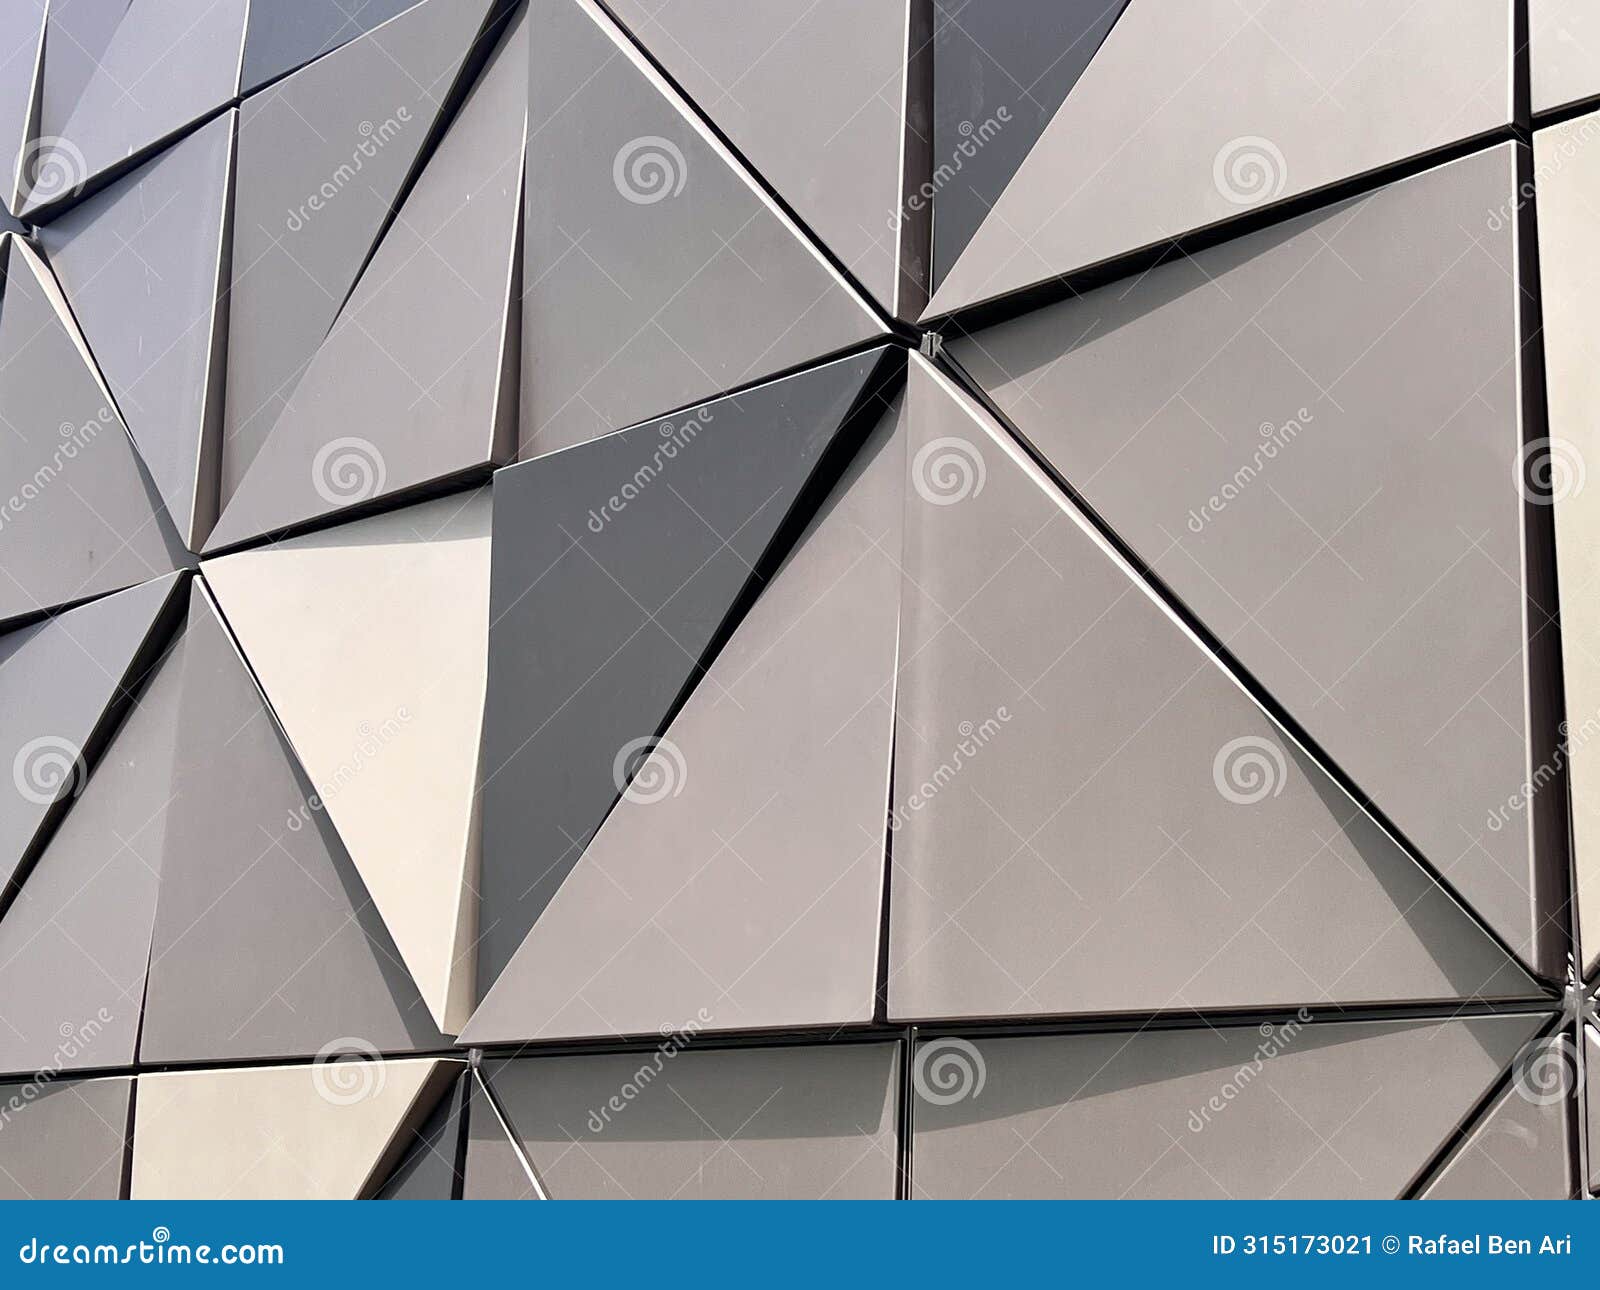 geometrical triangular  on metal building wall